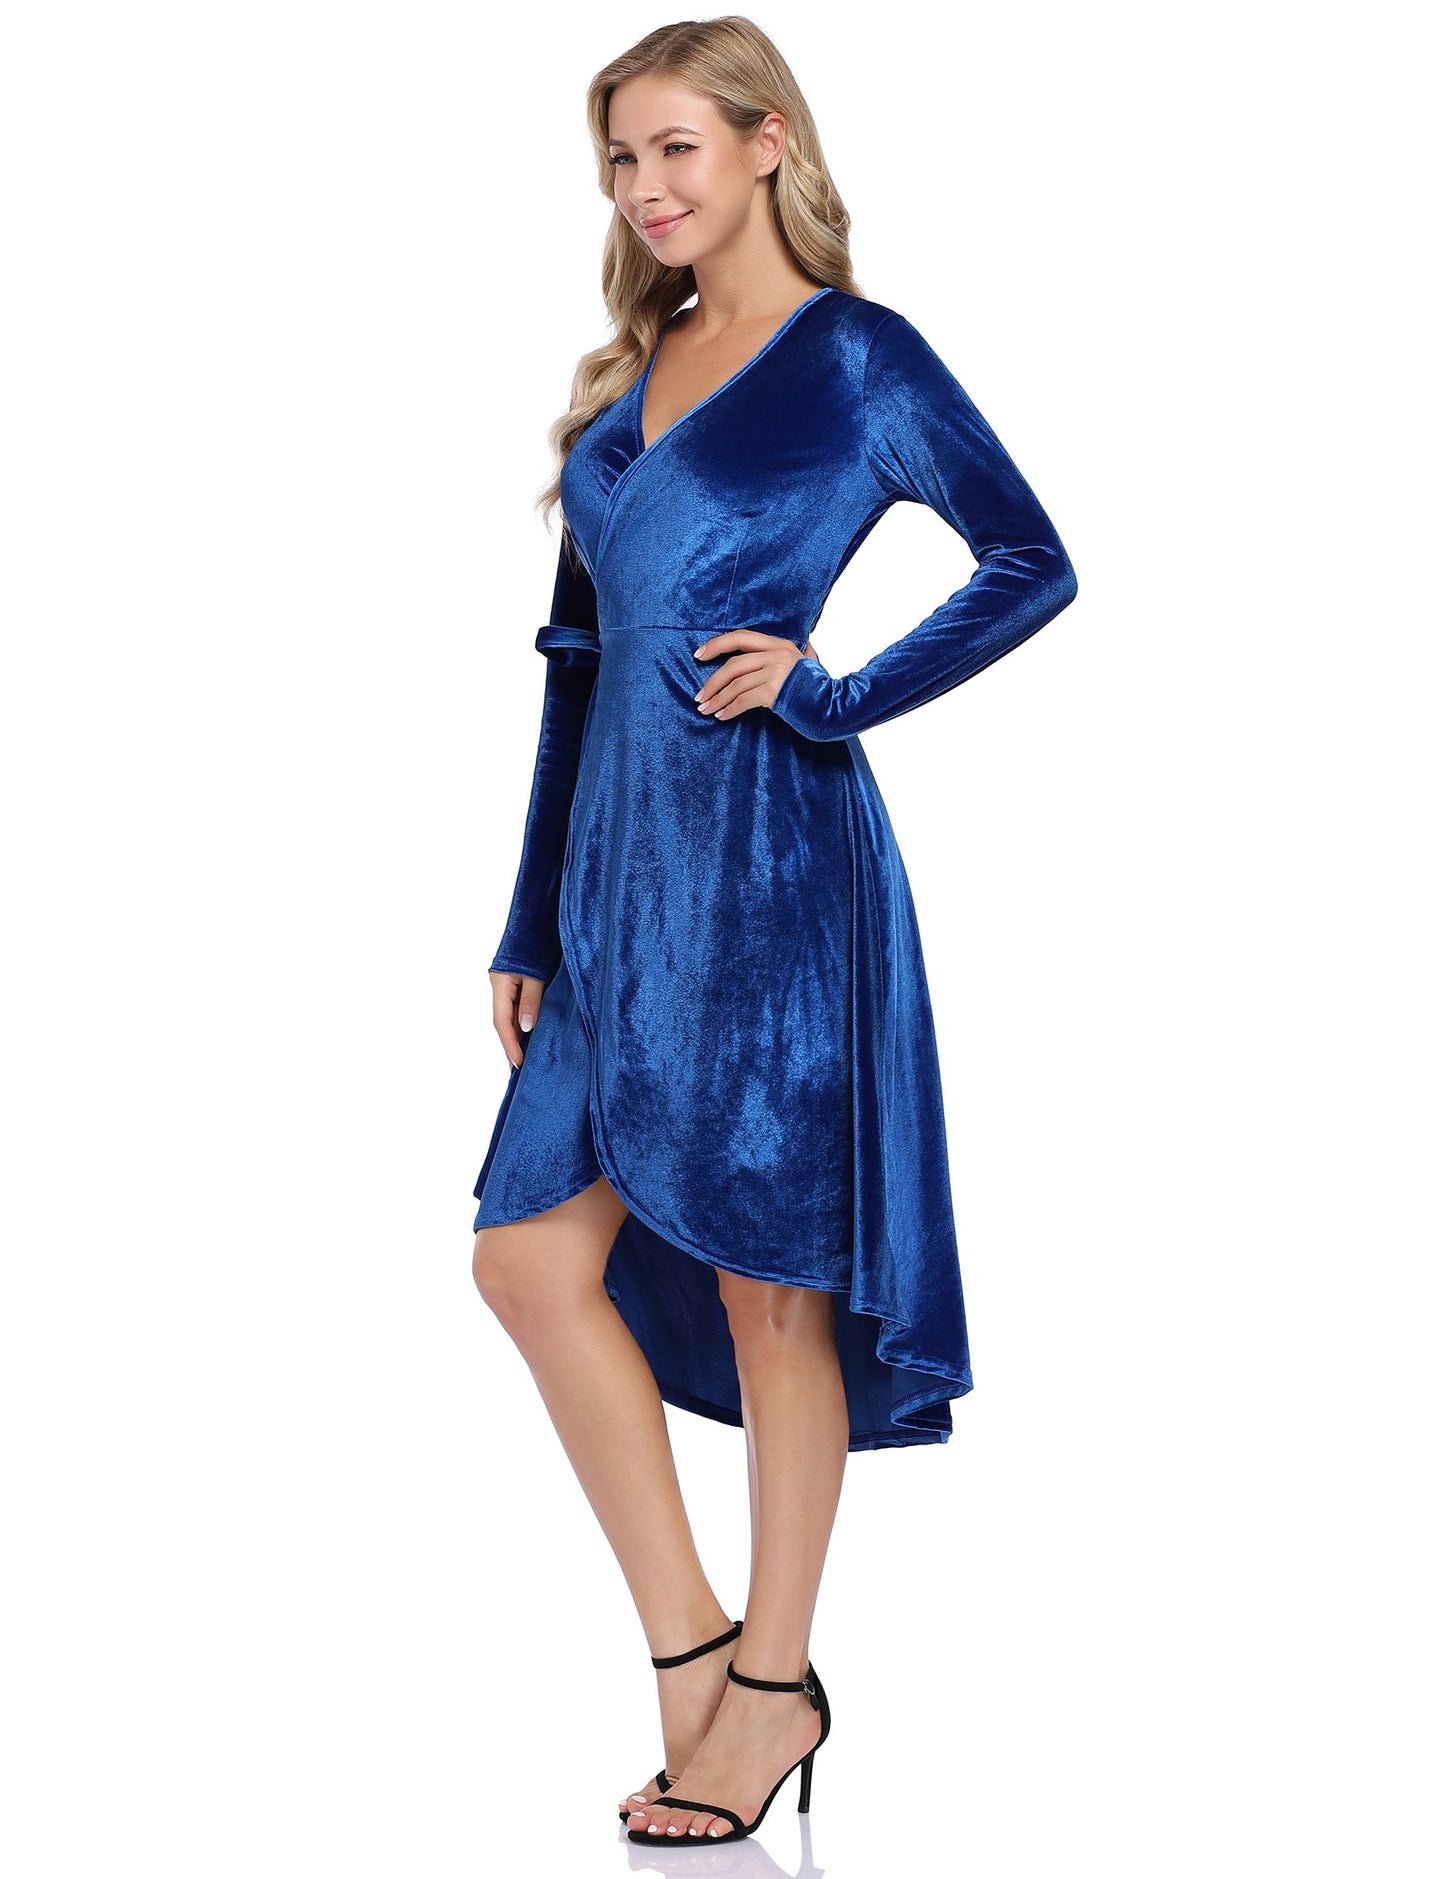 YESFASHION Women Velvet V-Neck Long Sleeve Empire Party Dress Blue